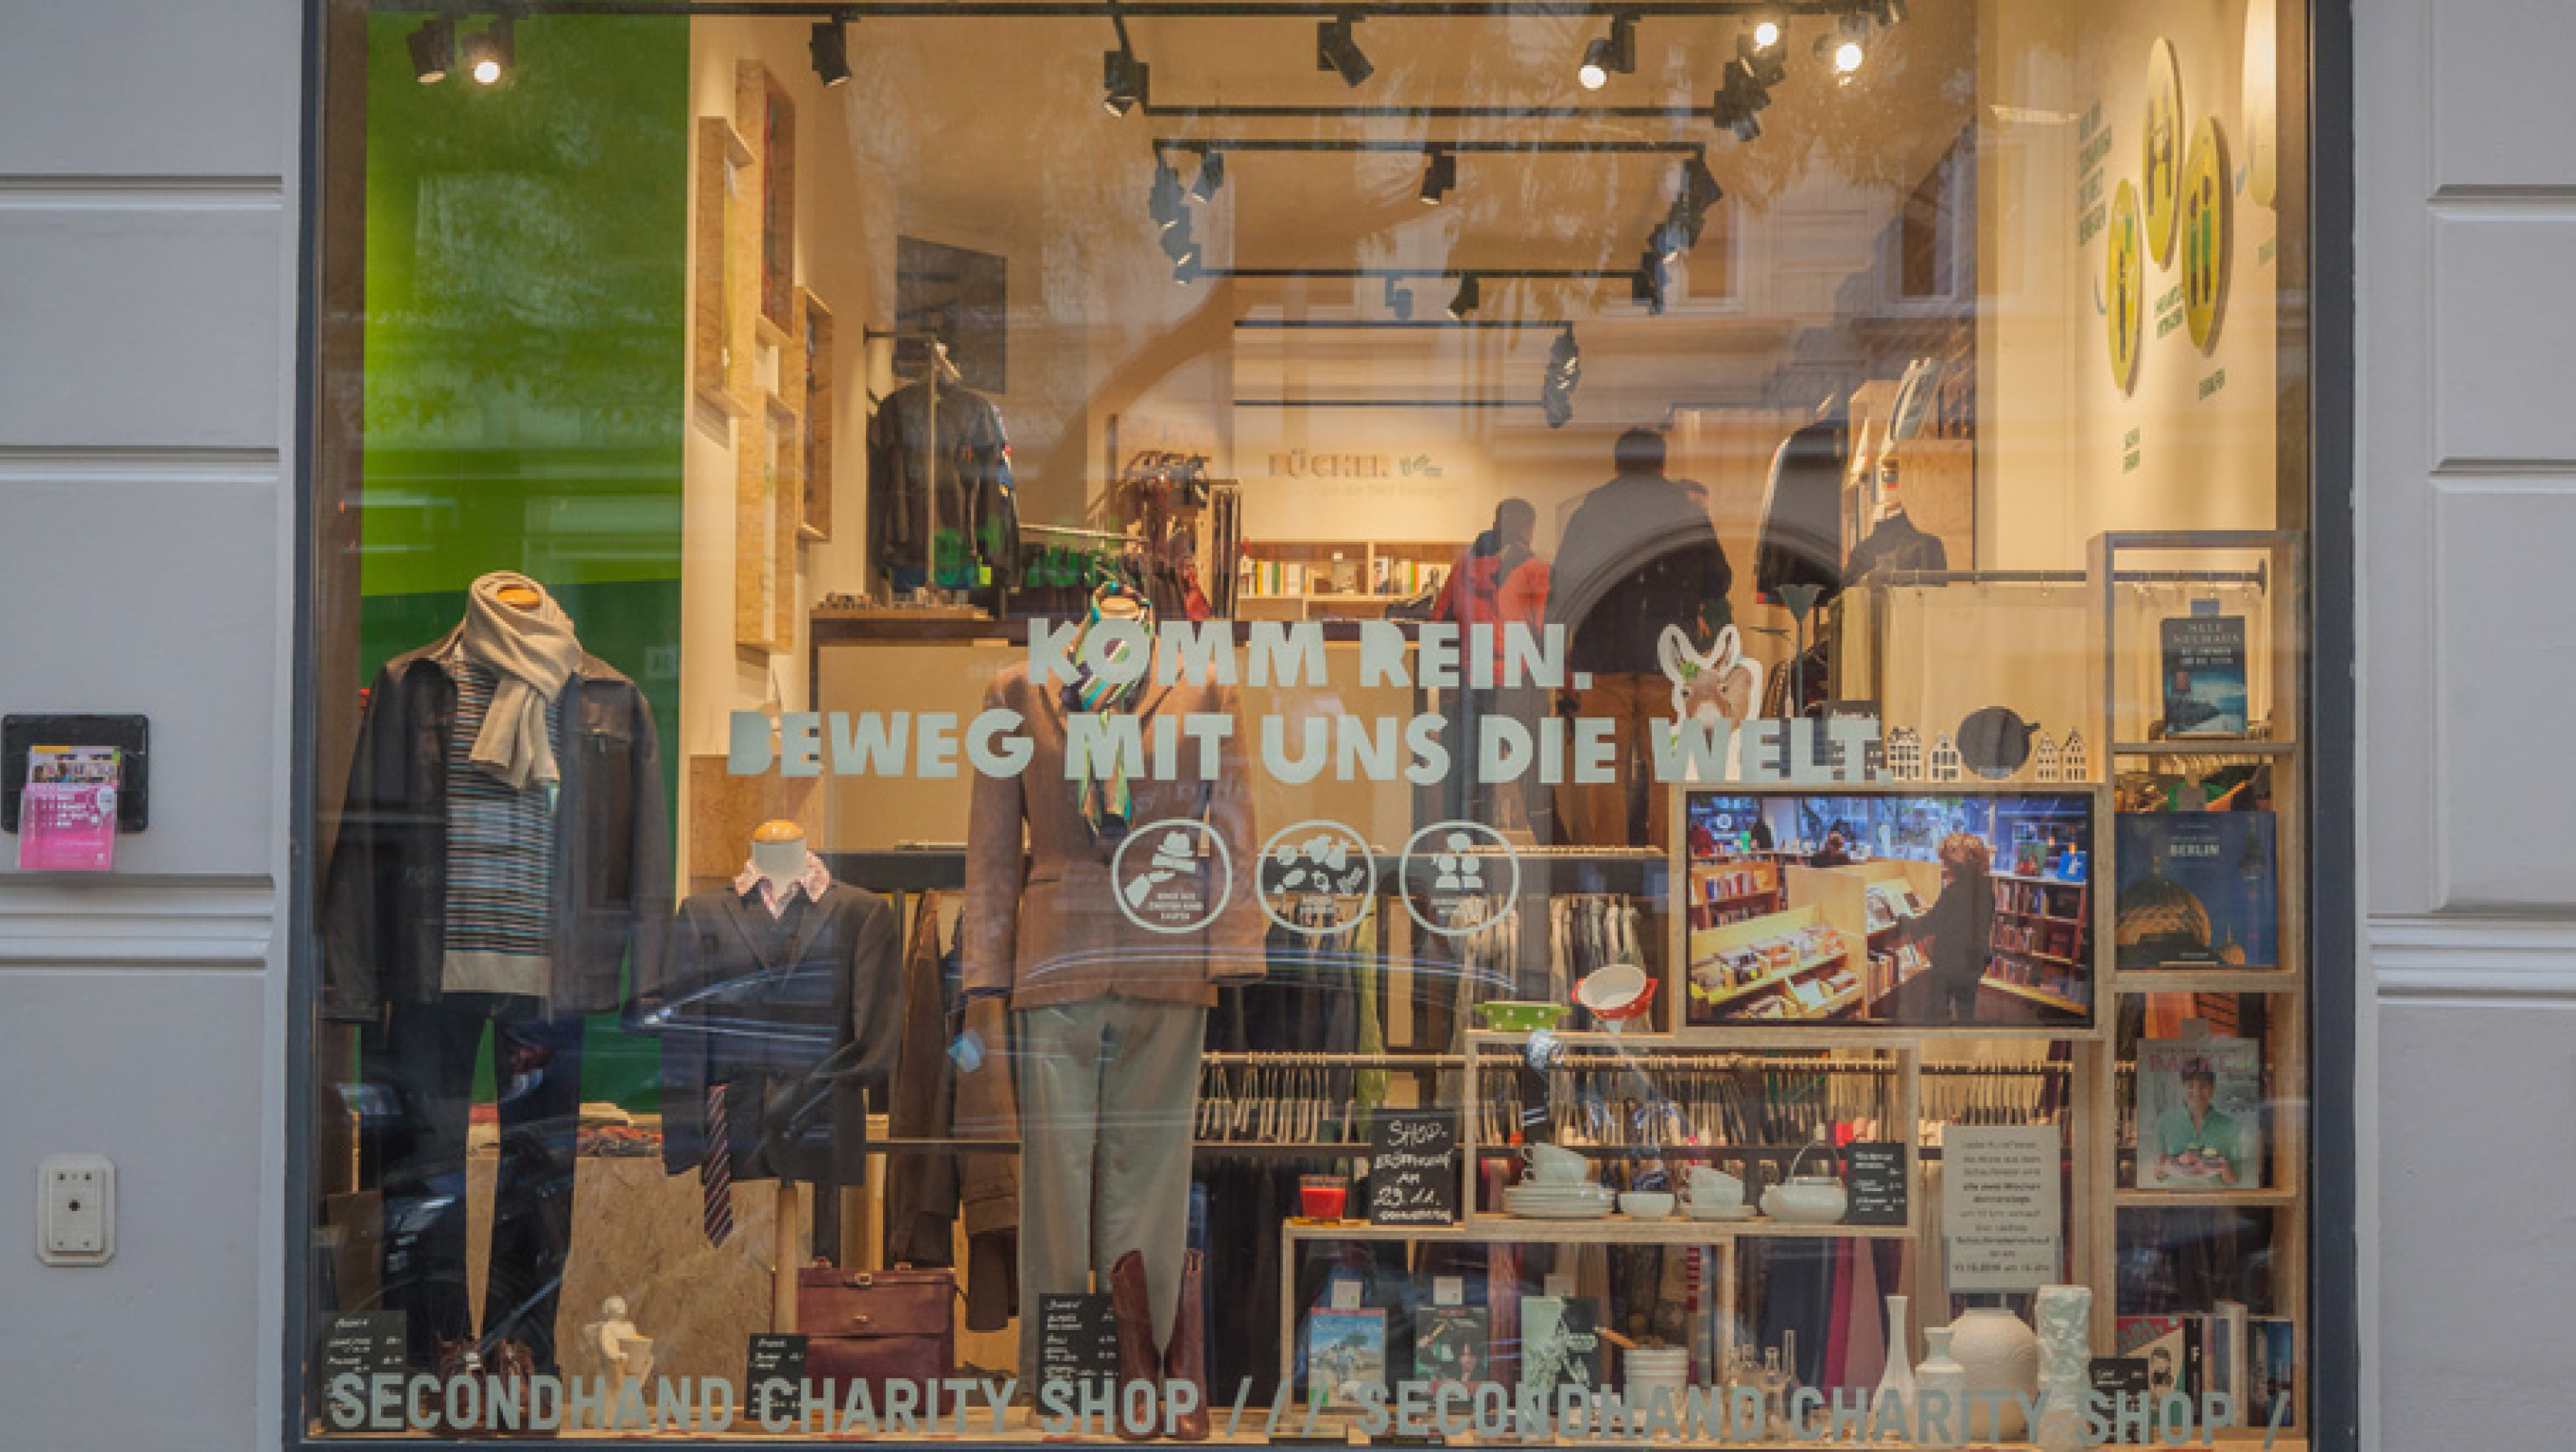 Außenansicht Oxfam Shop Berlin-Kreuzberg